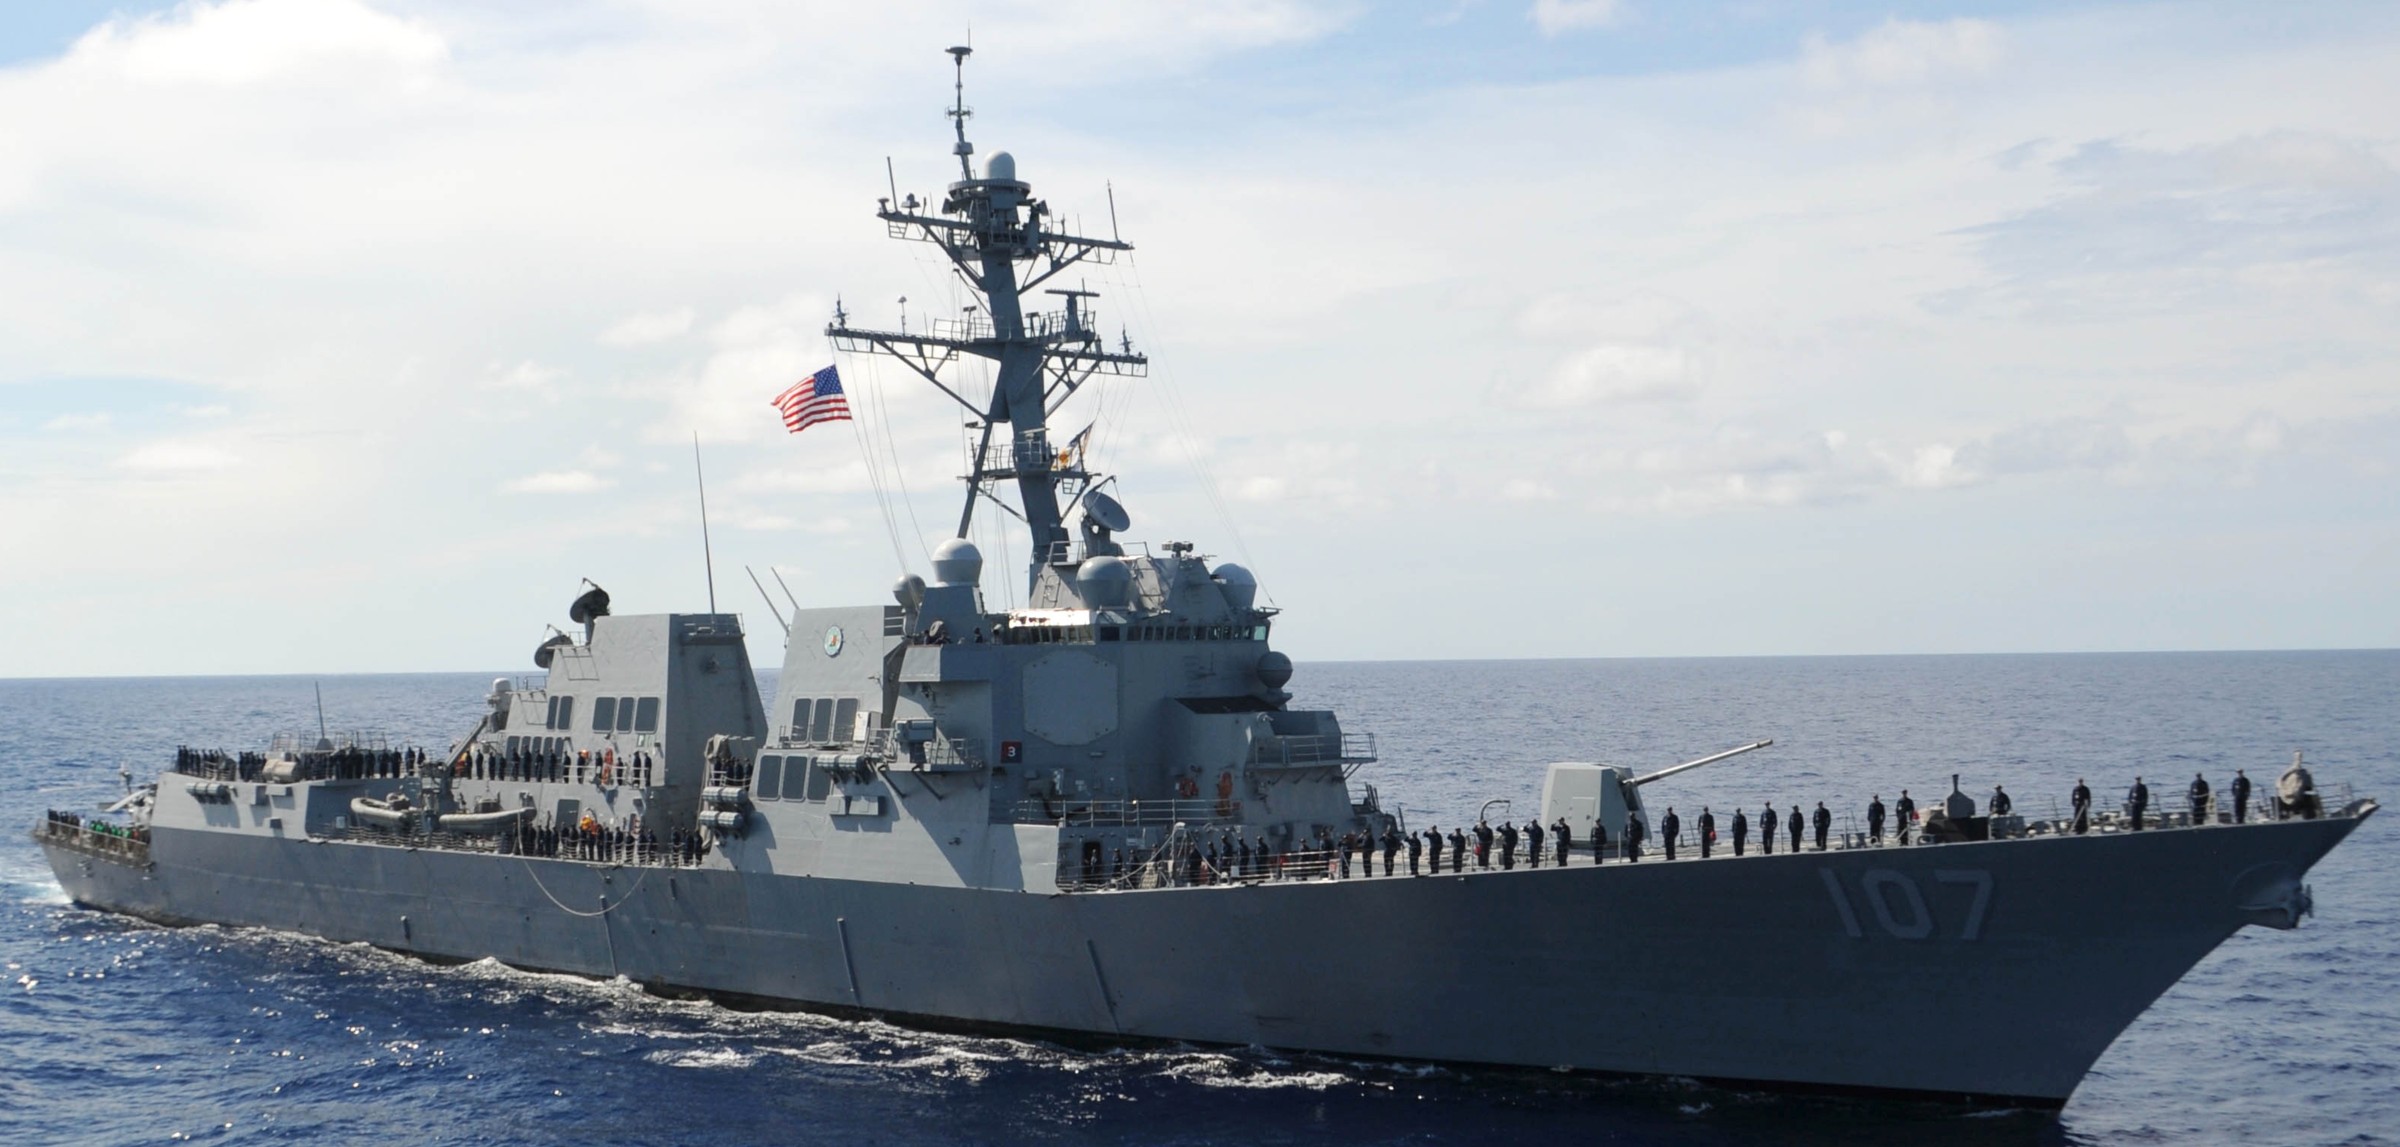 ddg-107 uss gravely arleigh burke class guided missile destroyer aegis us navy unitas caribbean sea 08